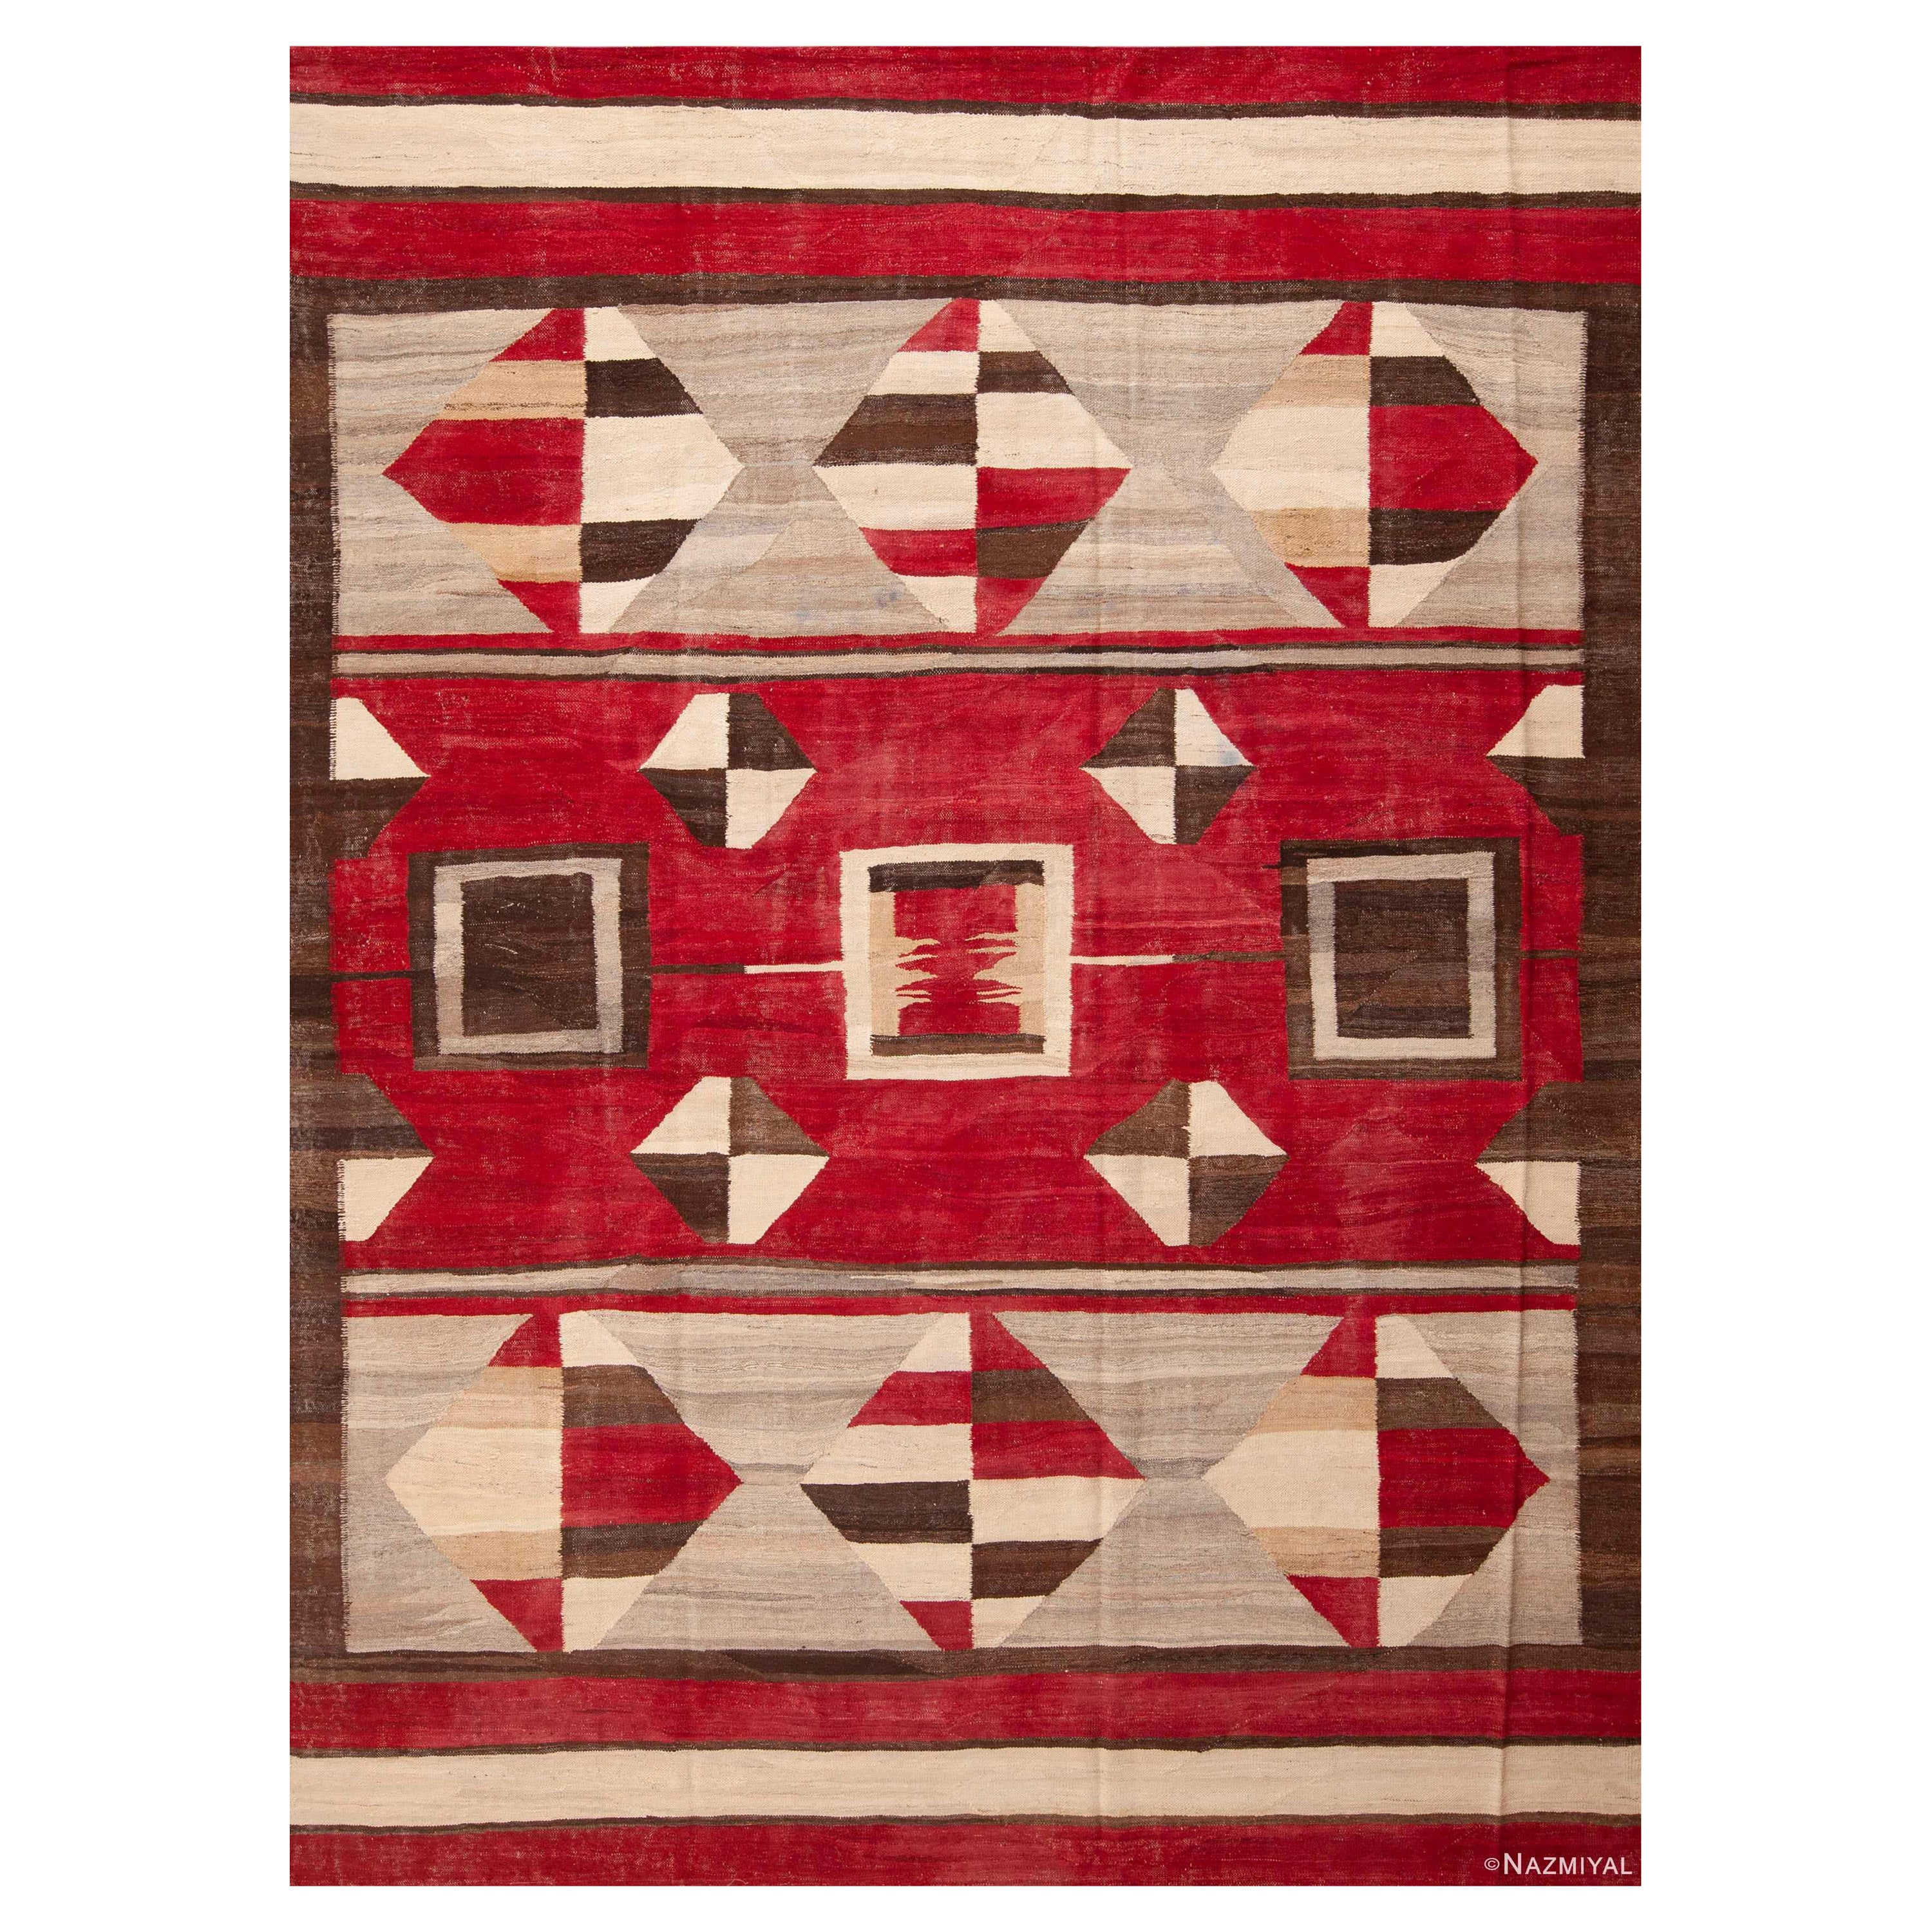 Nazmiyal Collection Modern Tribal Geometric Flatweave Kilim Rug 8'8" x 11'10"